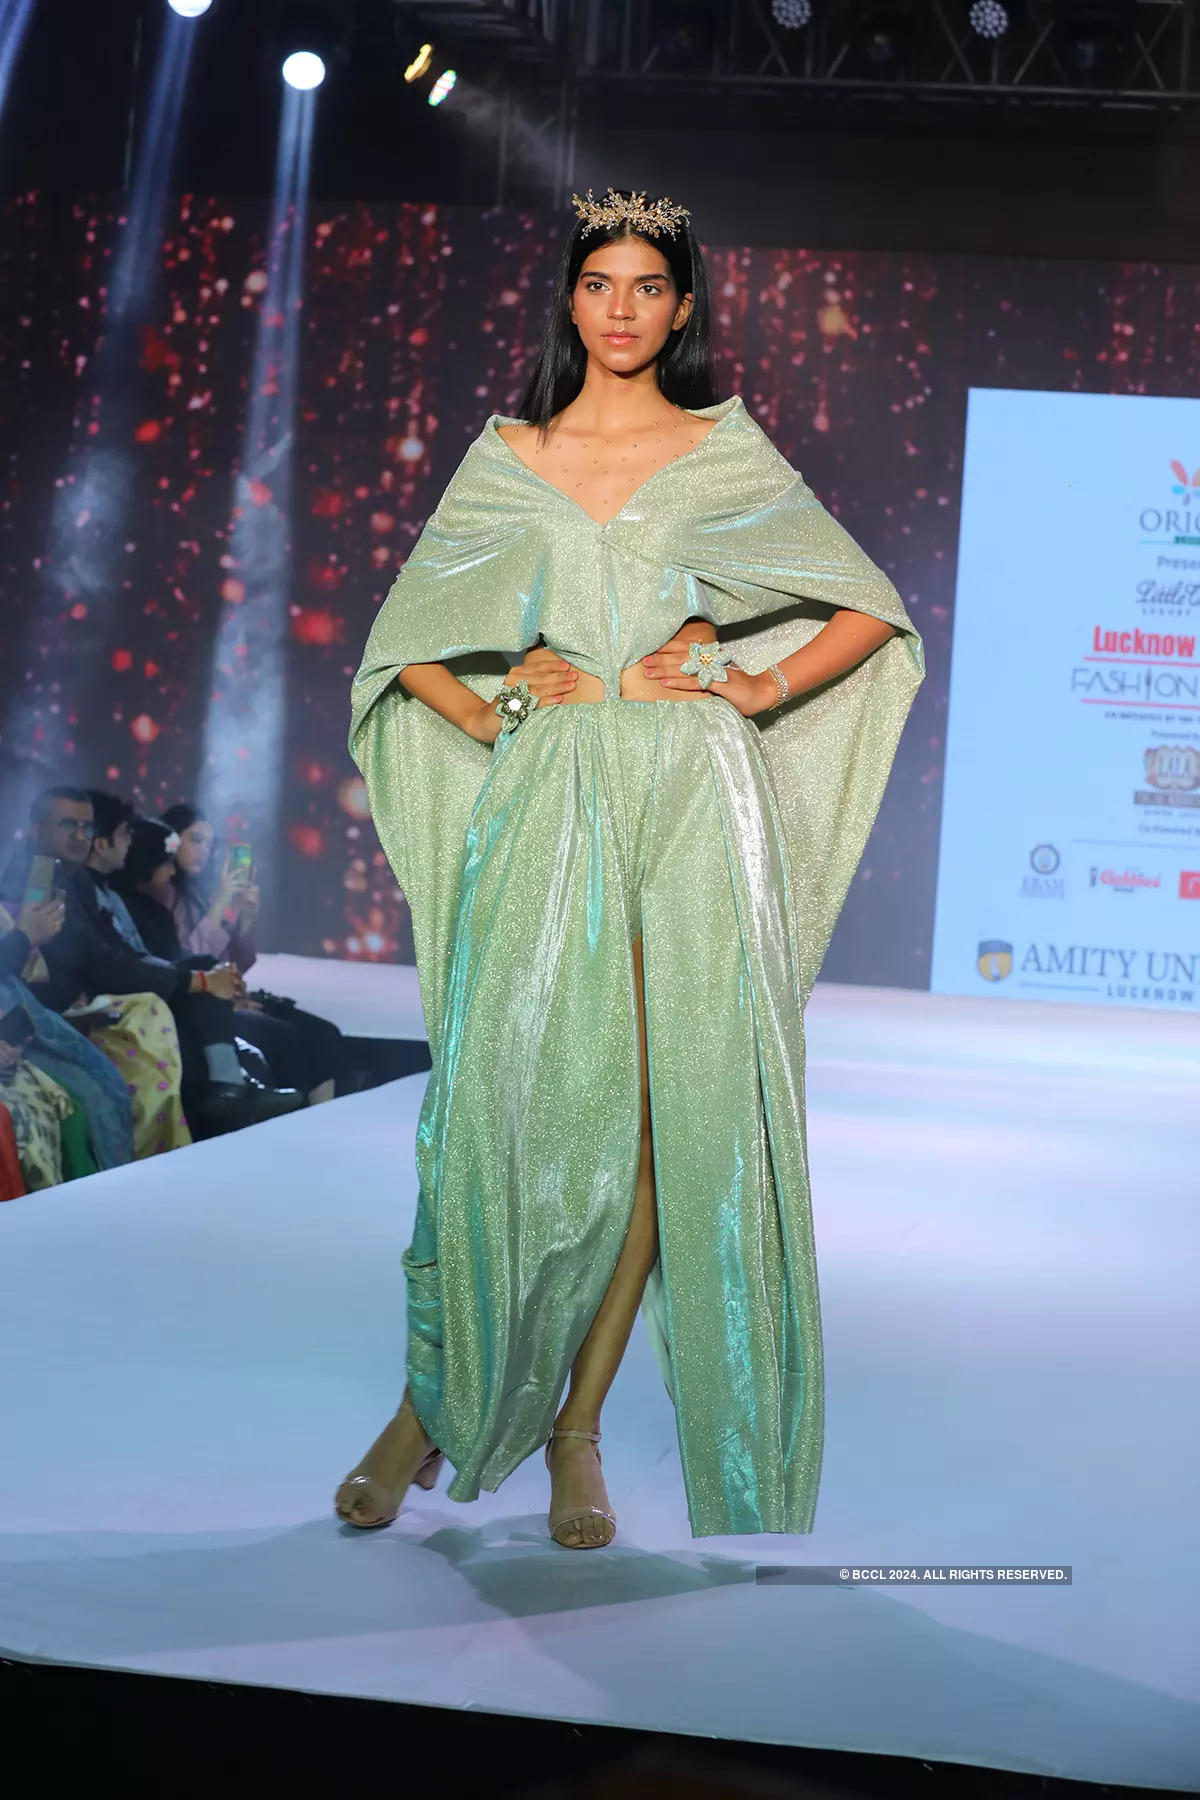 Lucknow Times Fashion Week 2022 - Day 2: Pooja Verma